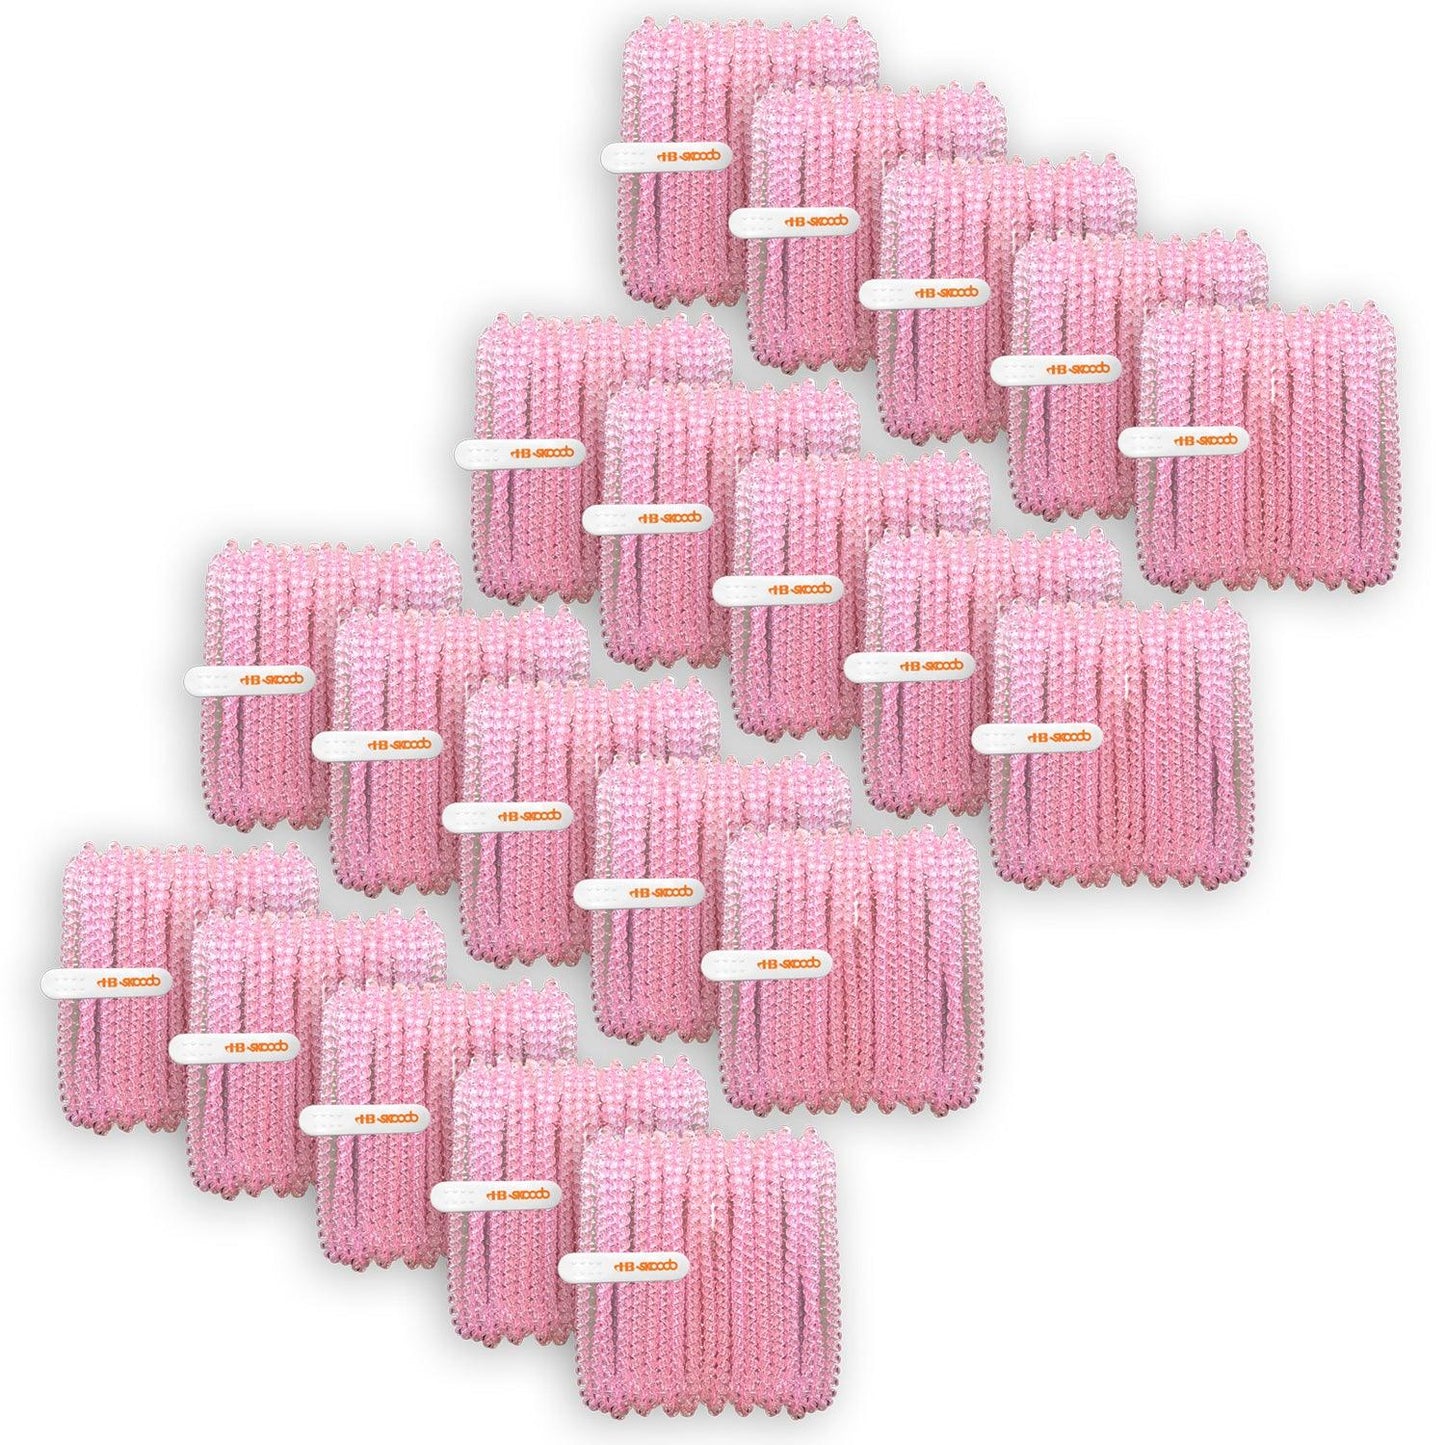 Skooob Tangle Free Earbud Covers - Translucent Pink, Pack of 20 - Loomini